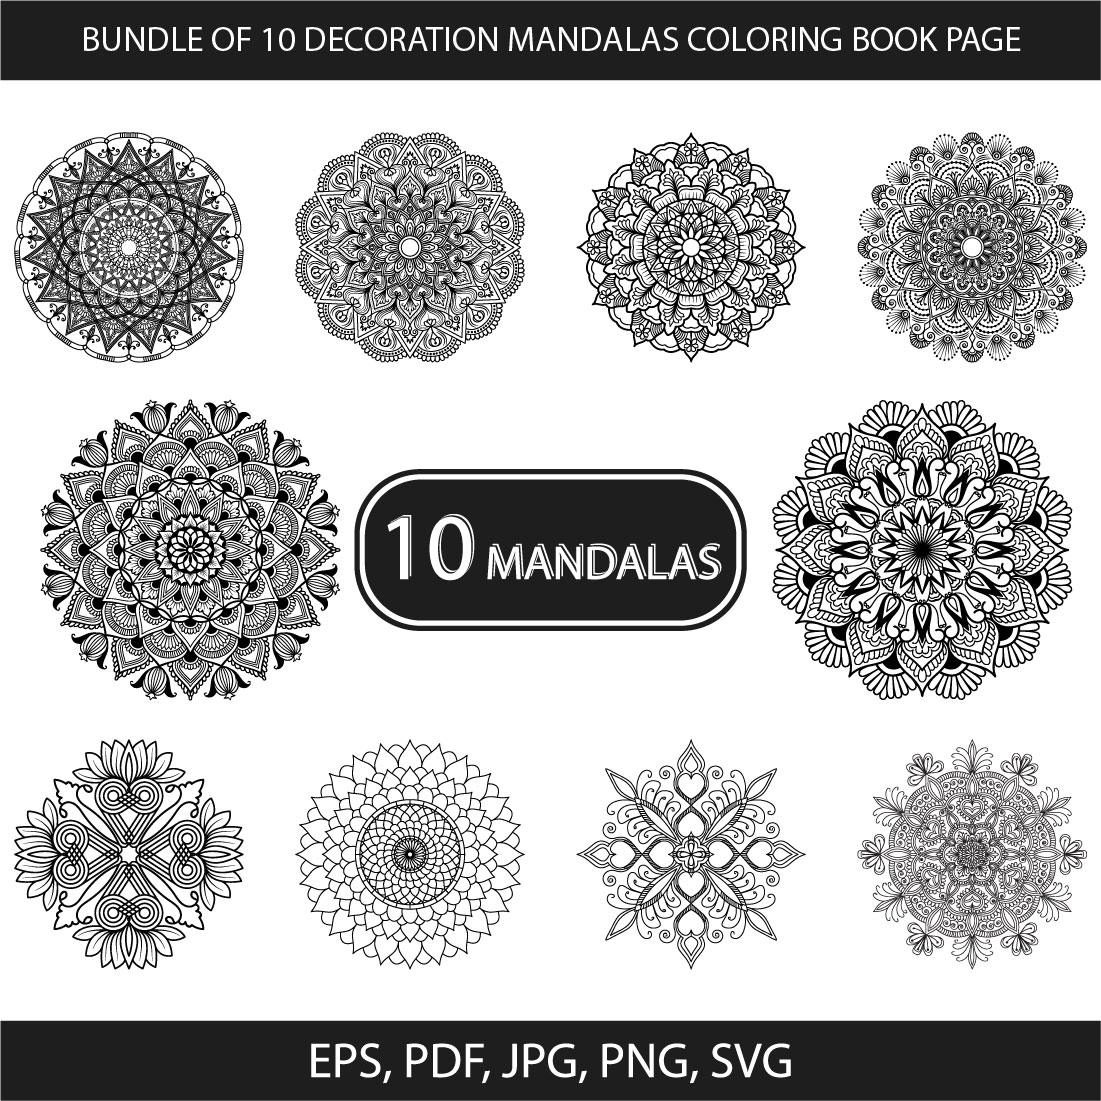 Bundle of 10 Decoration Mandalas Coloring Book Page cover image.